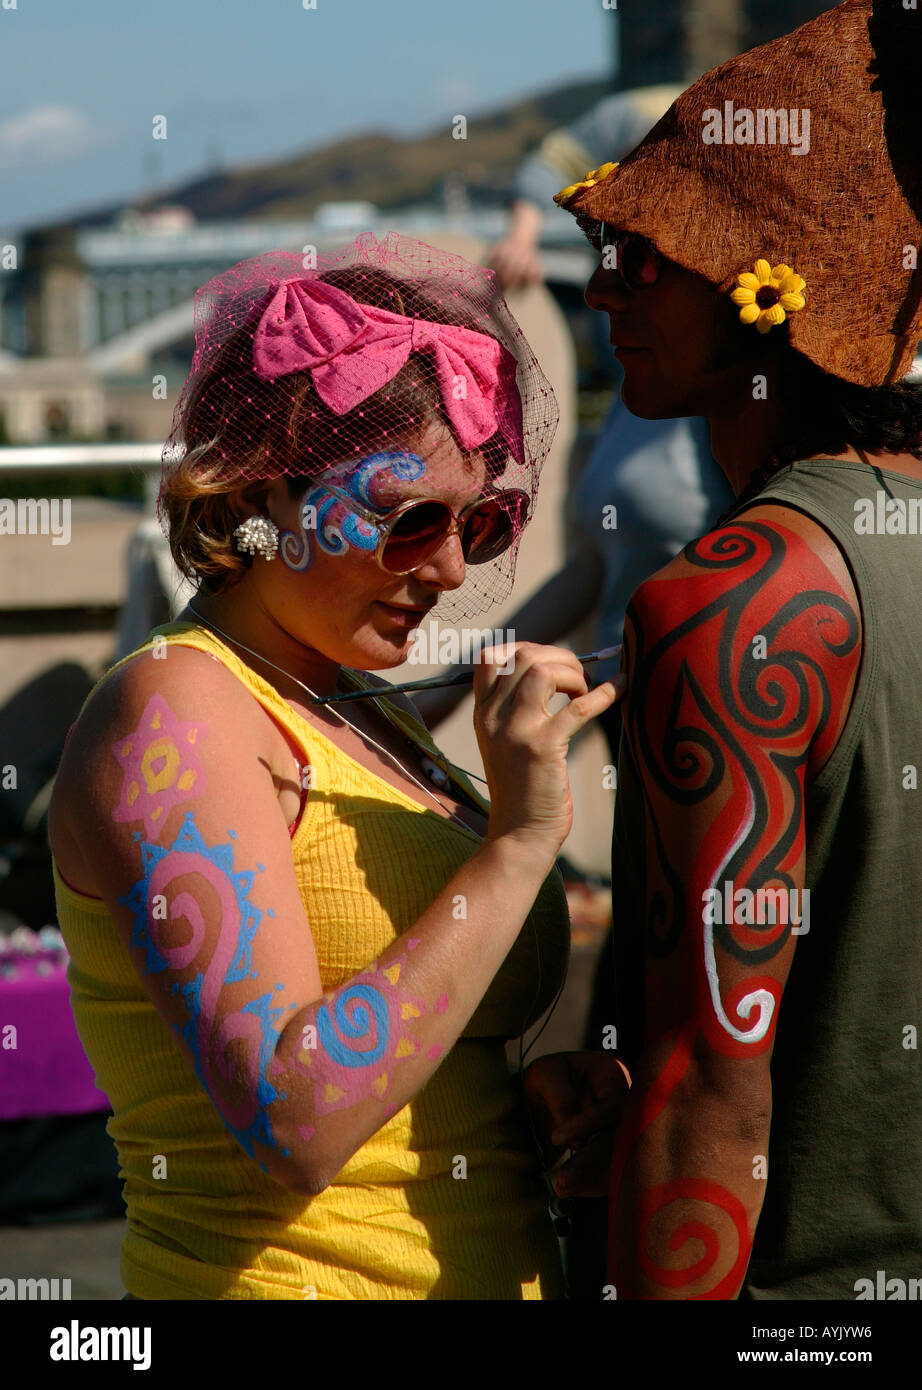 Colourful body painter completing work on a male subject, Edinburgh Fringe Festival, Scotland Stock Photo